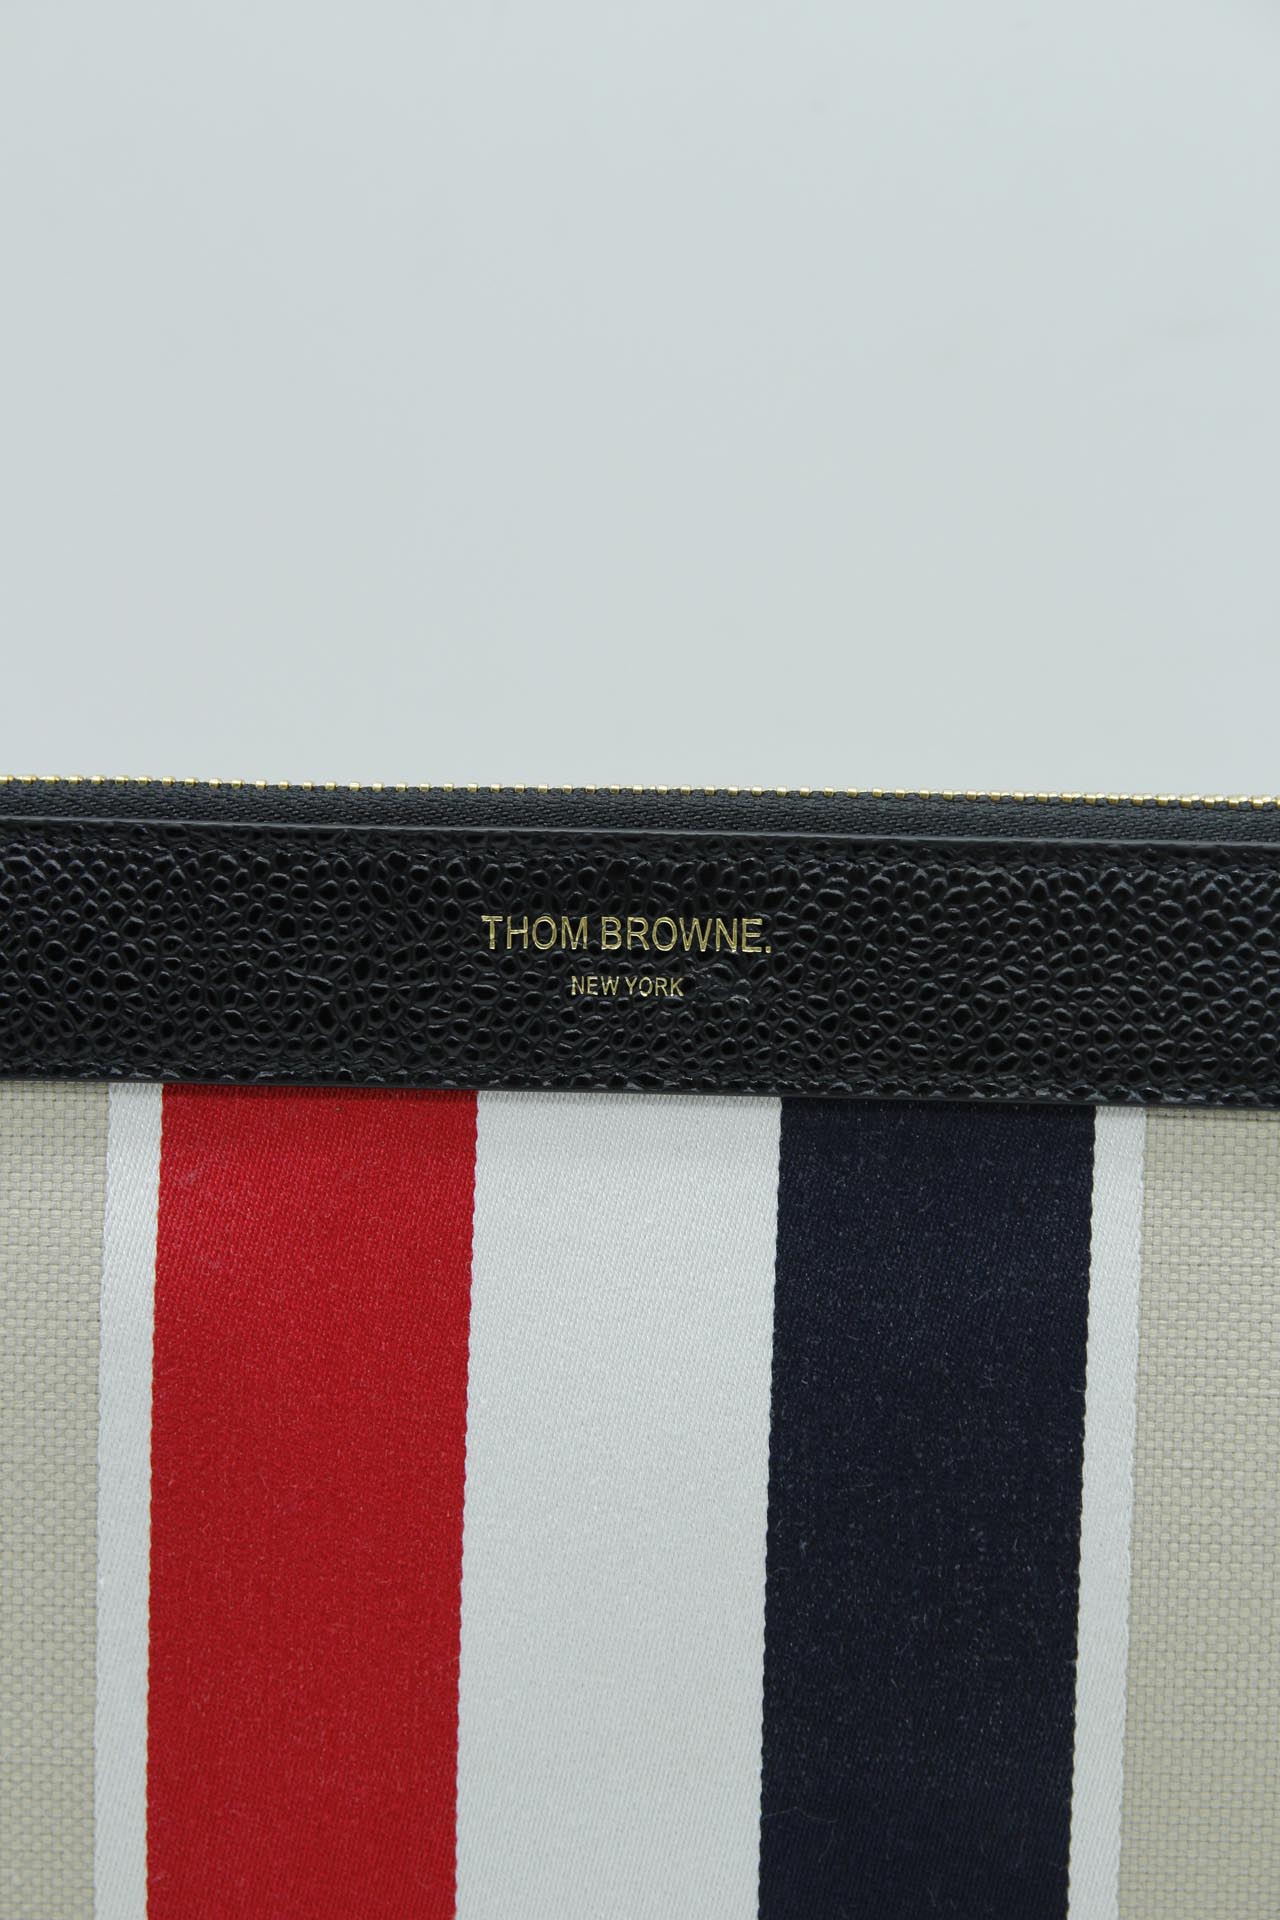 Thom Browne, Borsa a mano